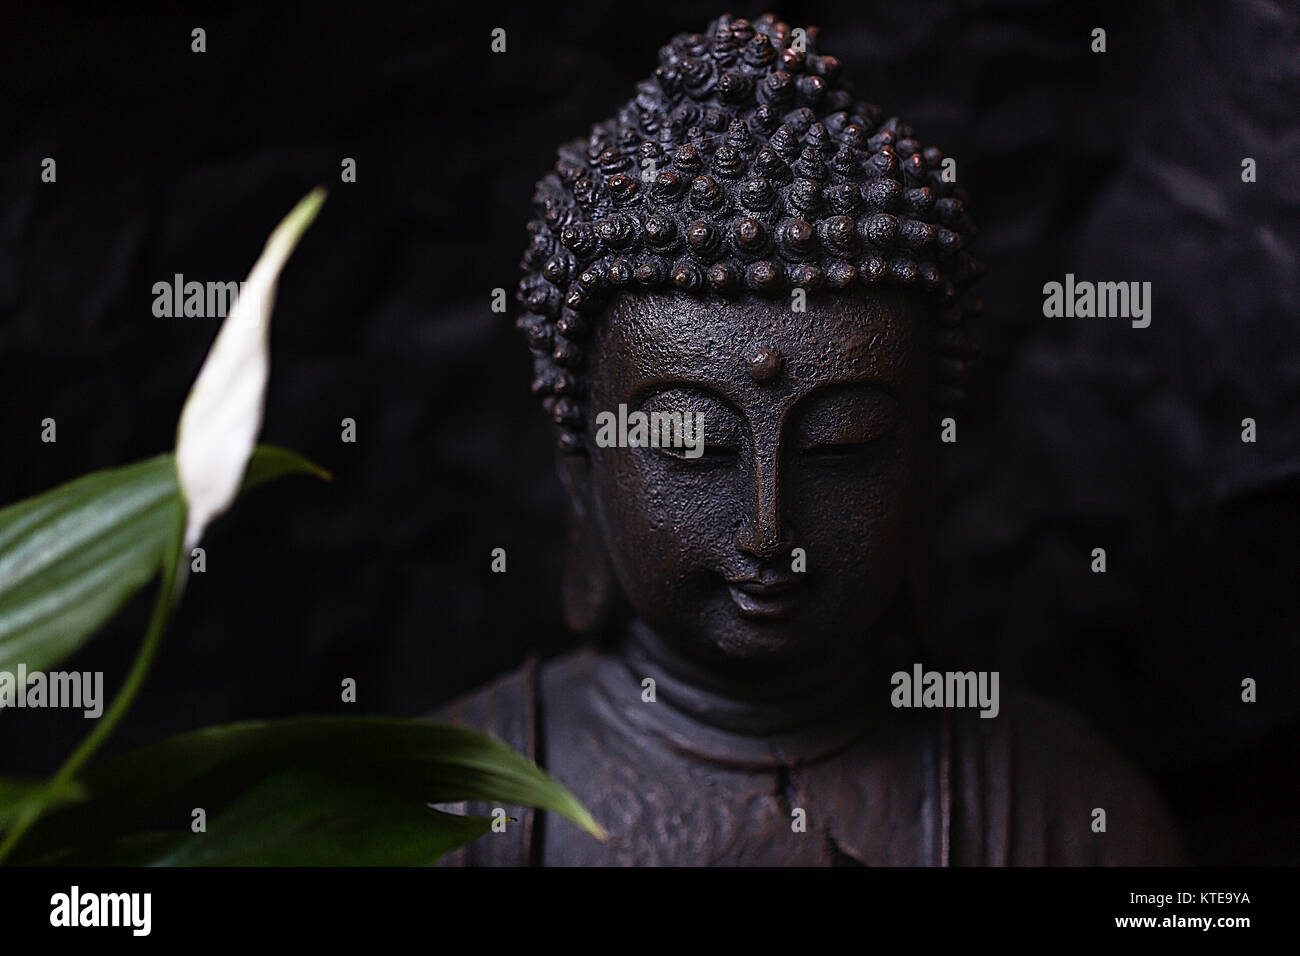 Black and White Photo of a Buddha Statue · Free Stock Photo